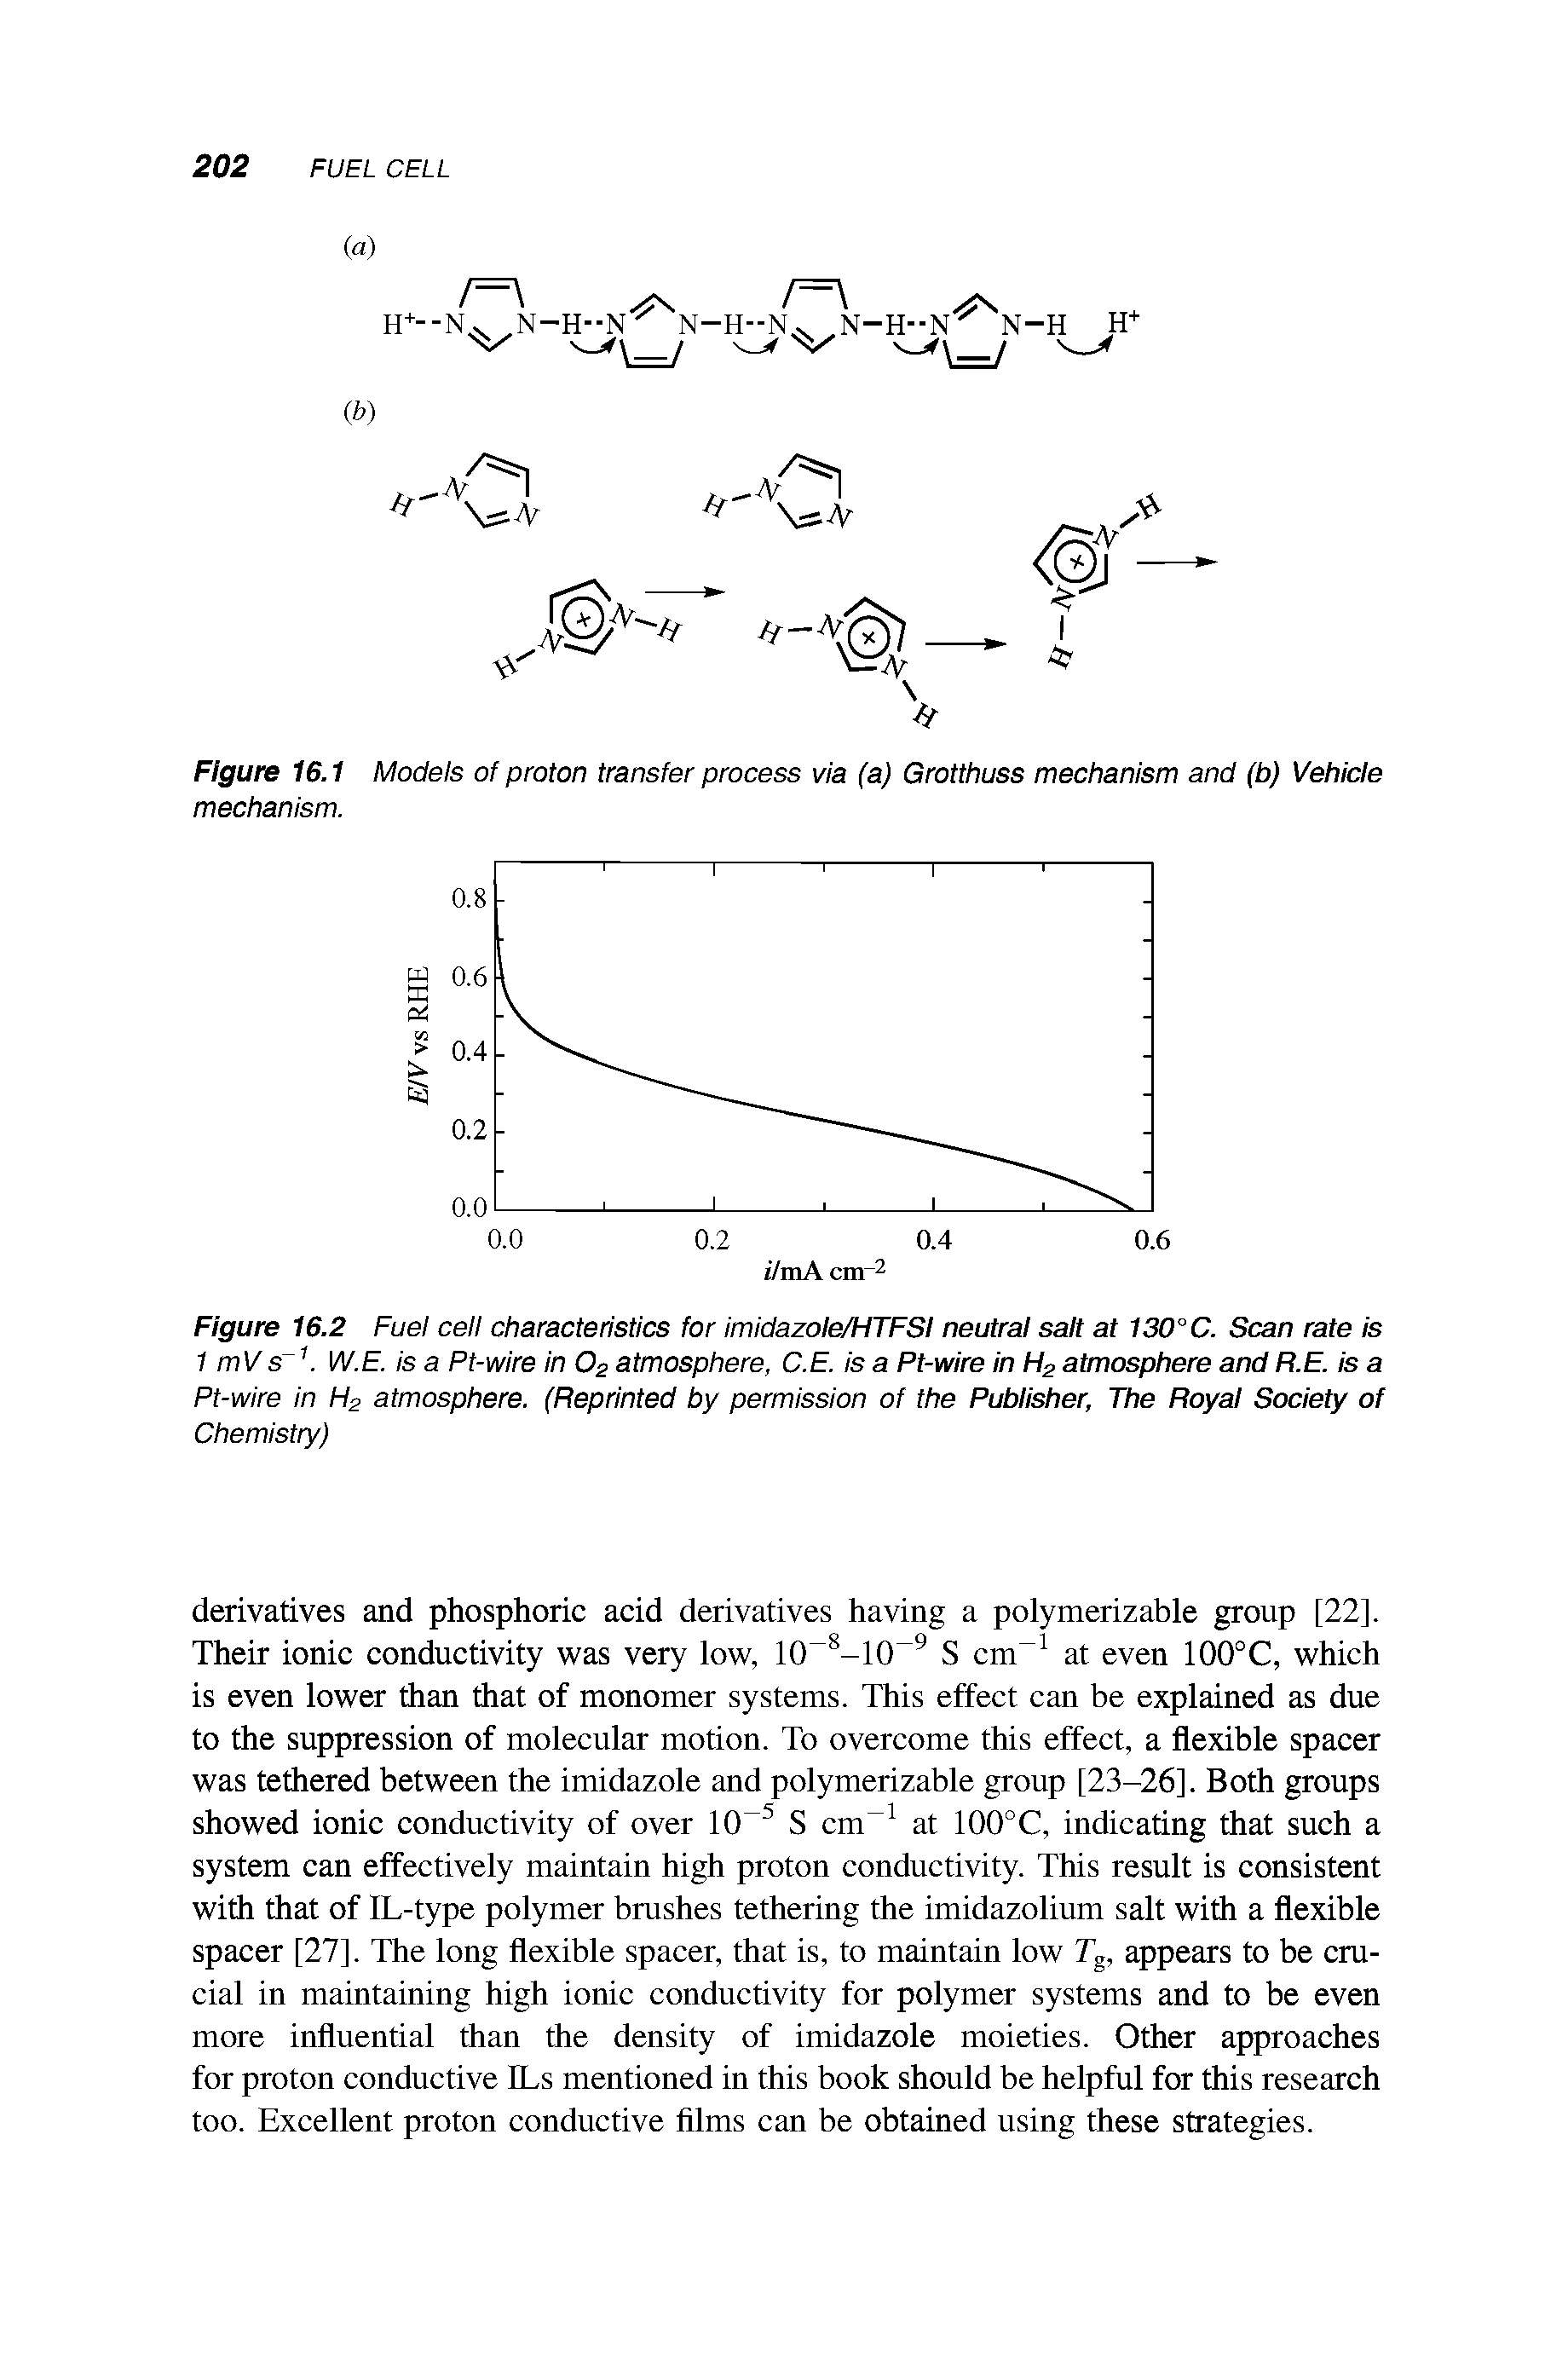 Figure 16.1 Models of proton transfer process via (a) Grotthuss mechanism and (b) Vehicle mechanism.